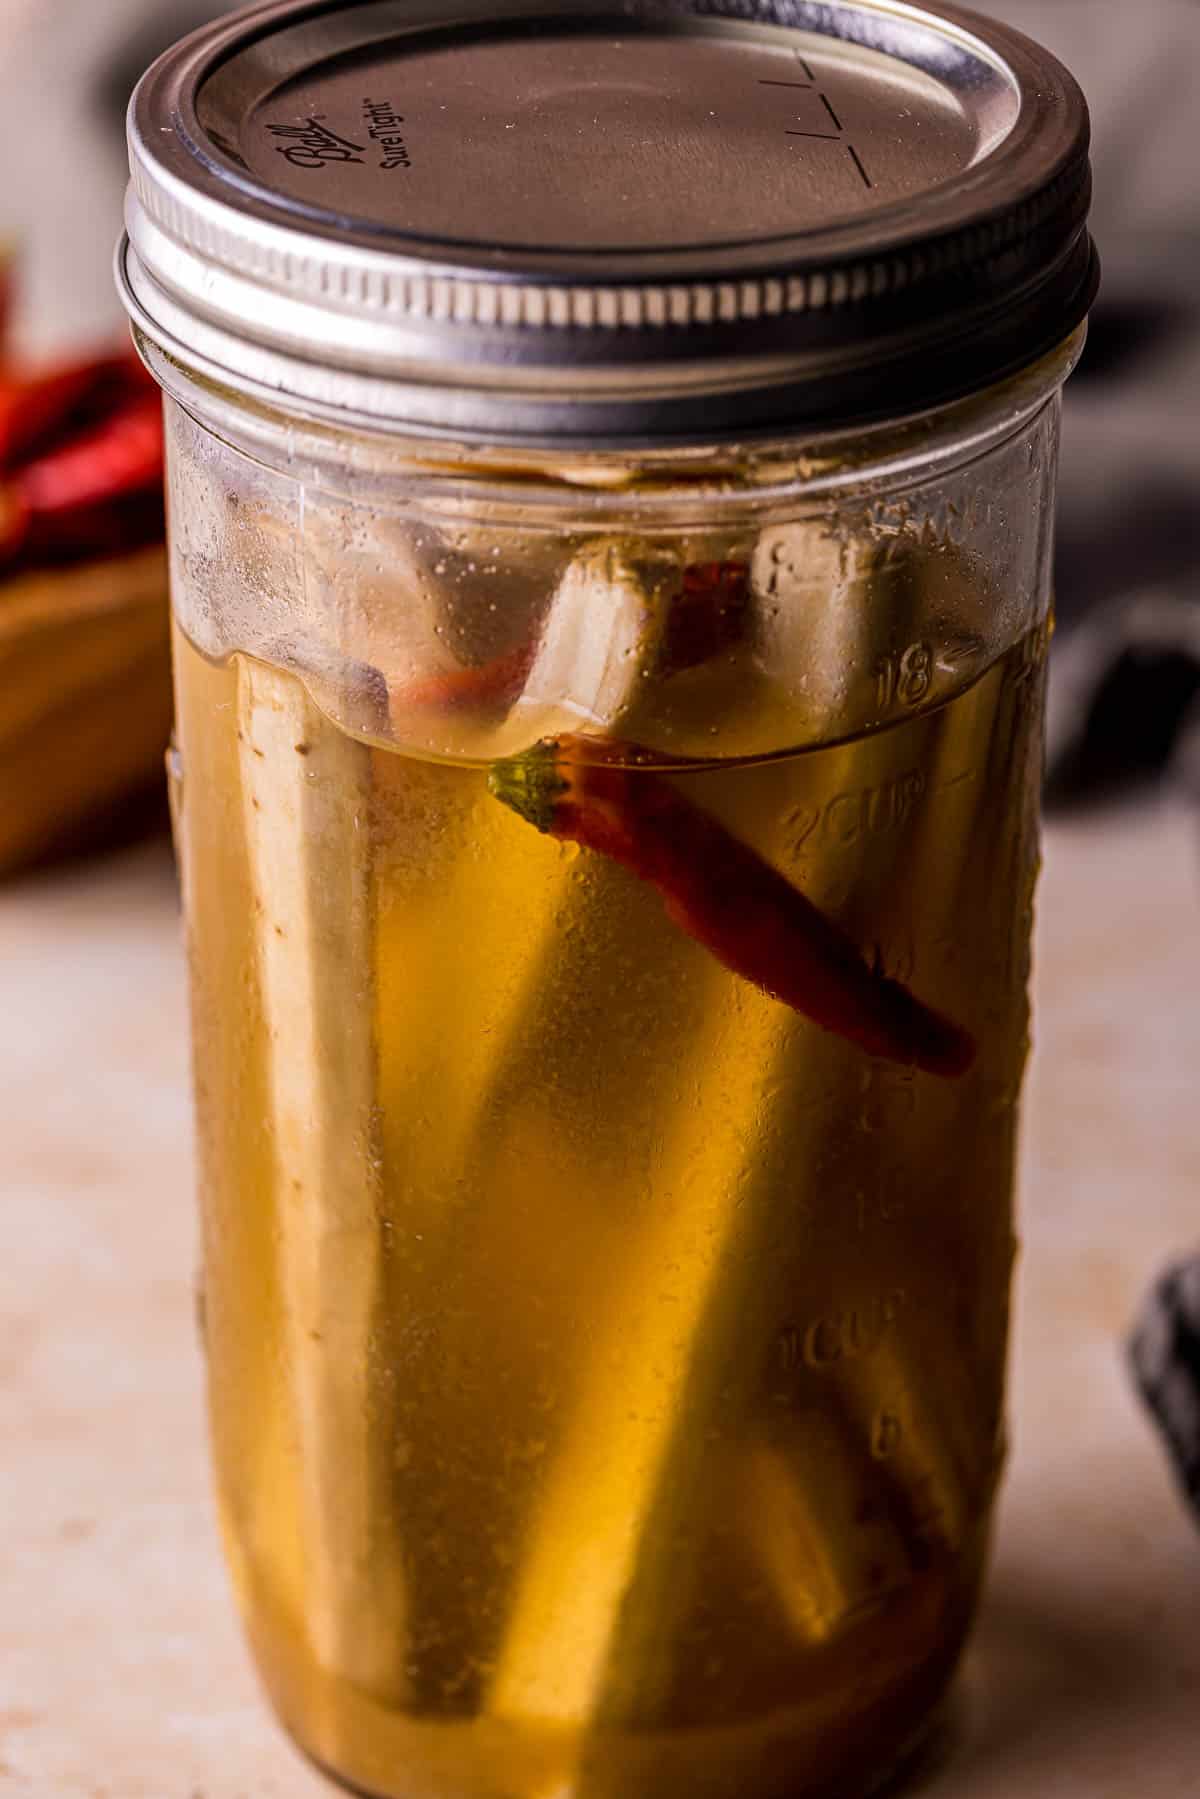 liquid and cut veggies in a jar